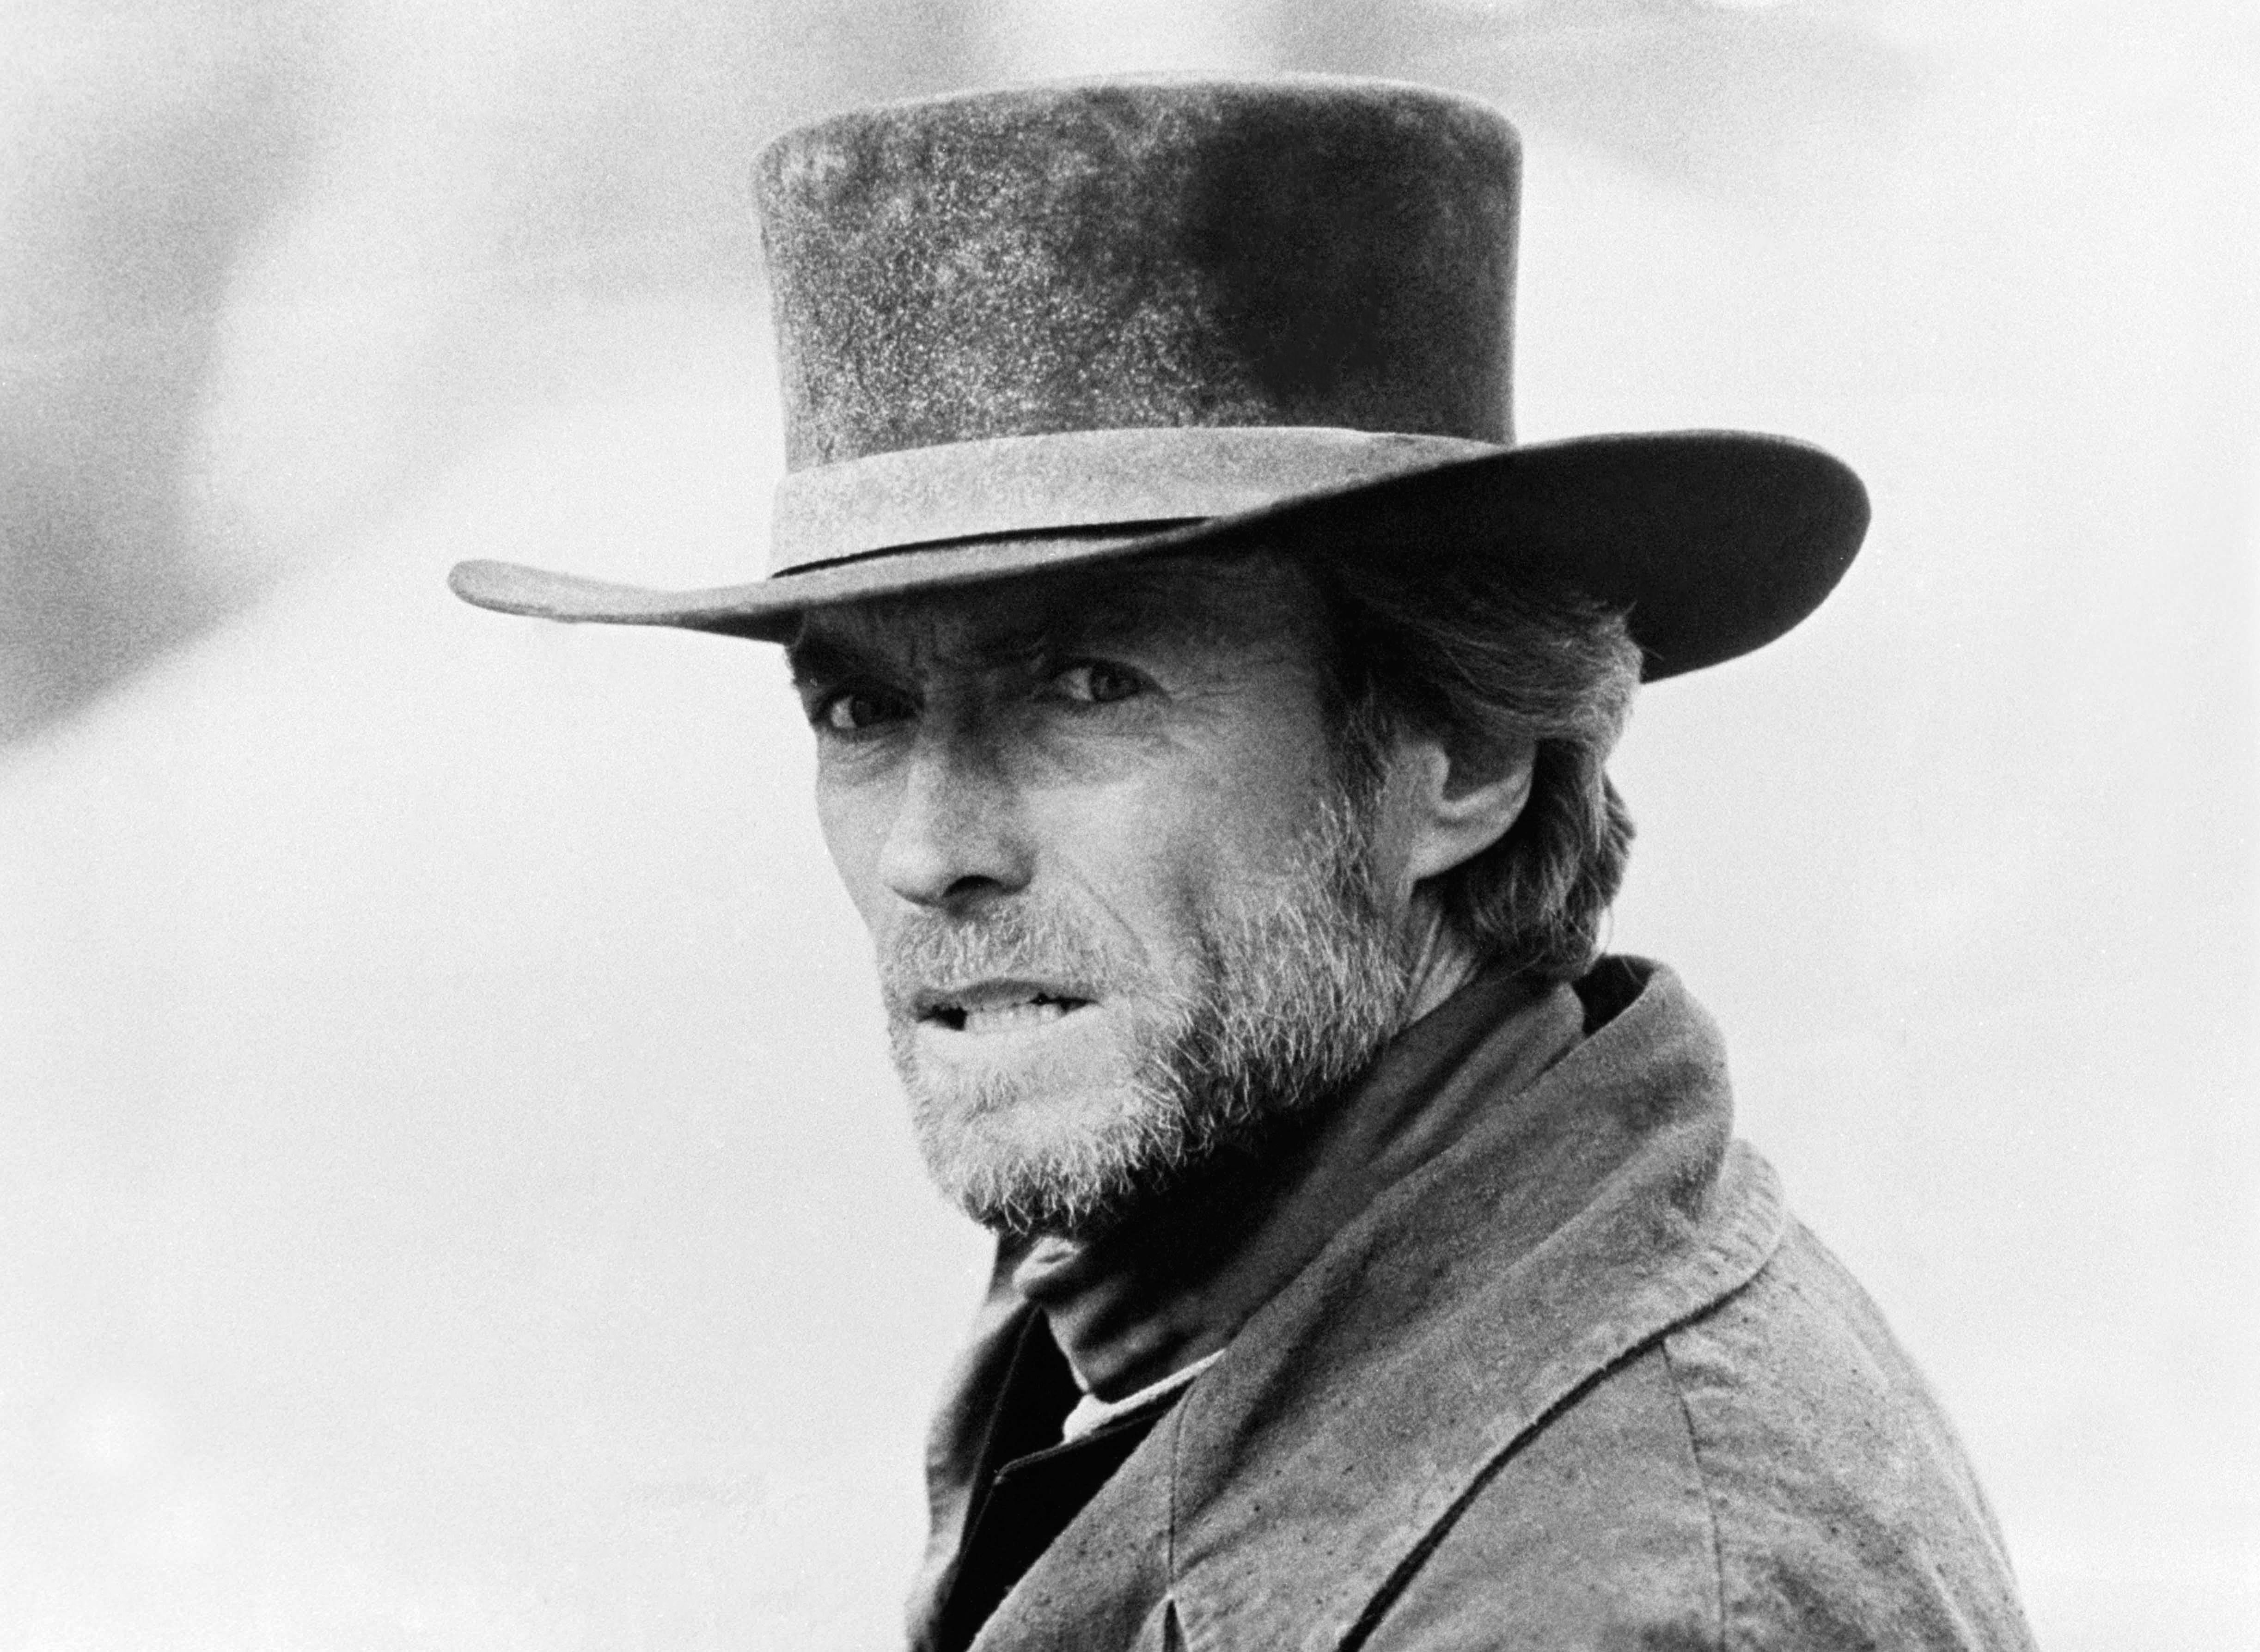 Unknown Portrait Photograph - Clint Eastwood as Preacher in "Pale Rider" Globe Photos Fine Art Print